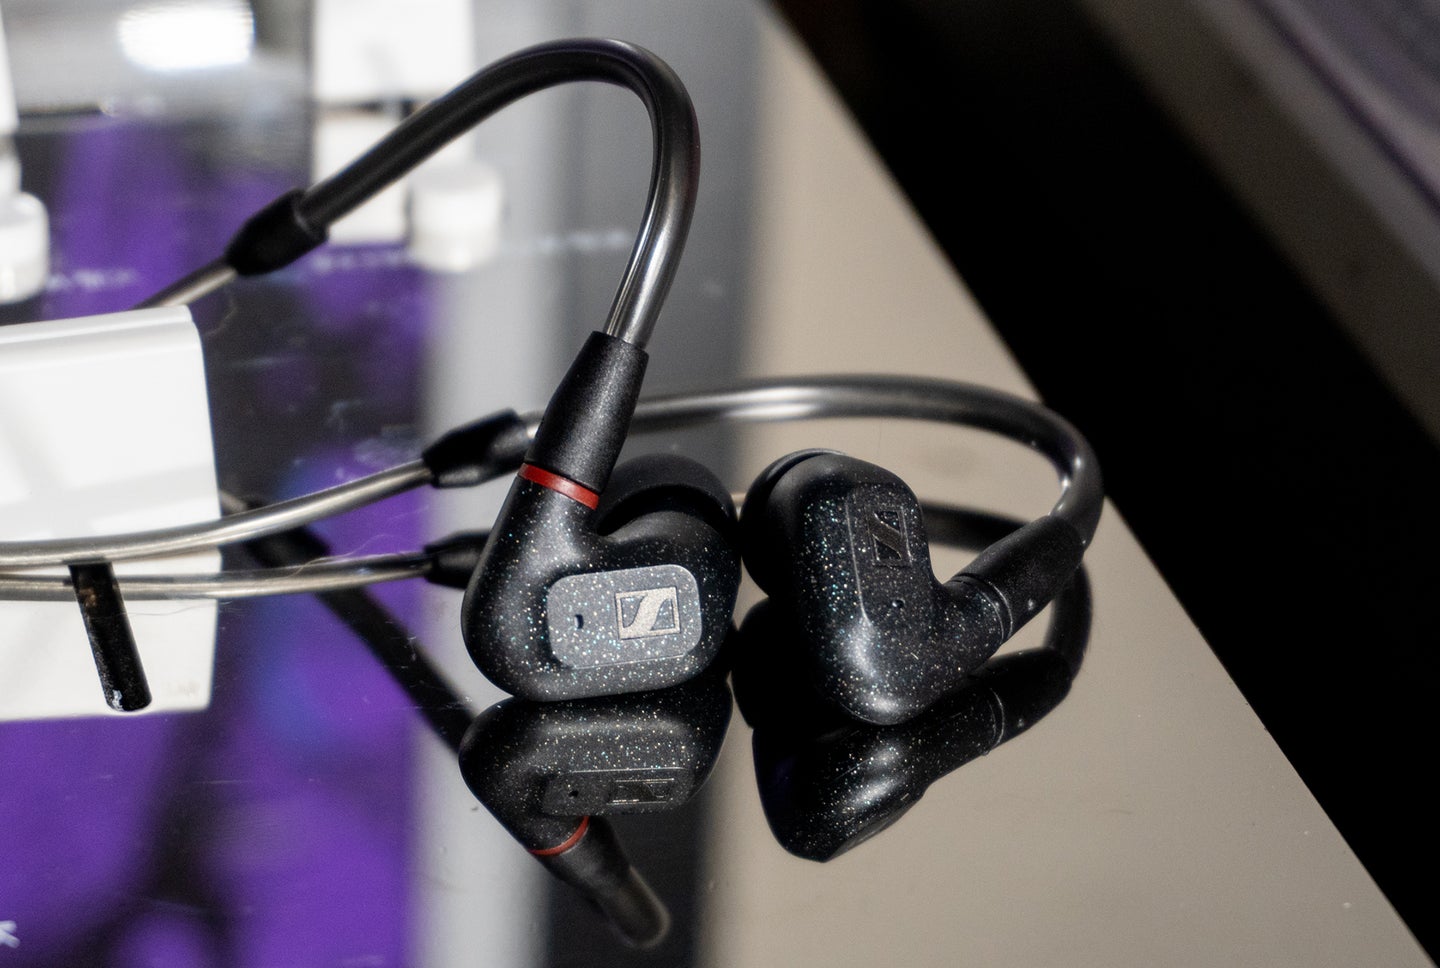 Sennheiser IE 300 earphones on a reflective mixer